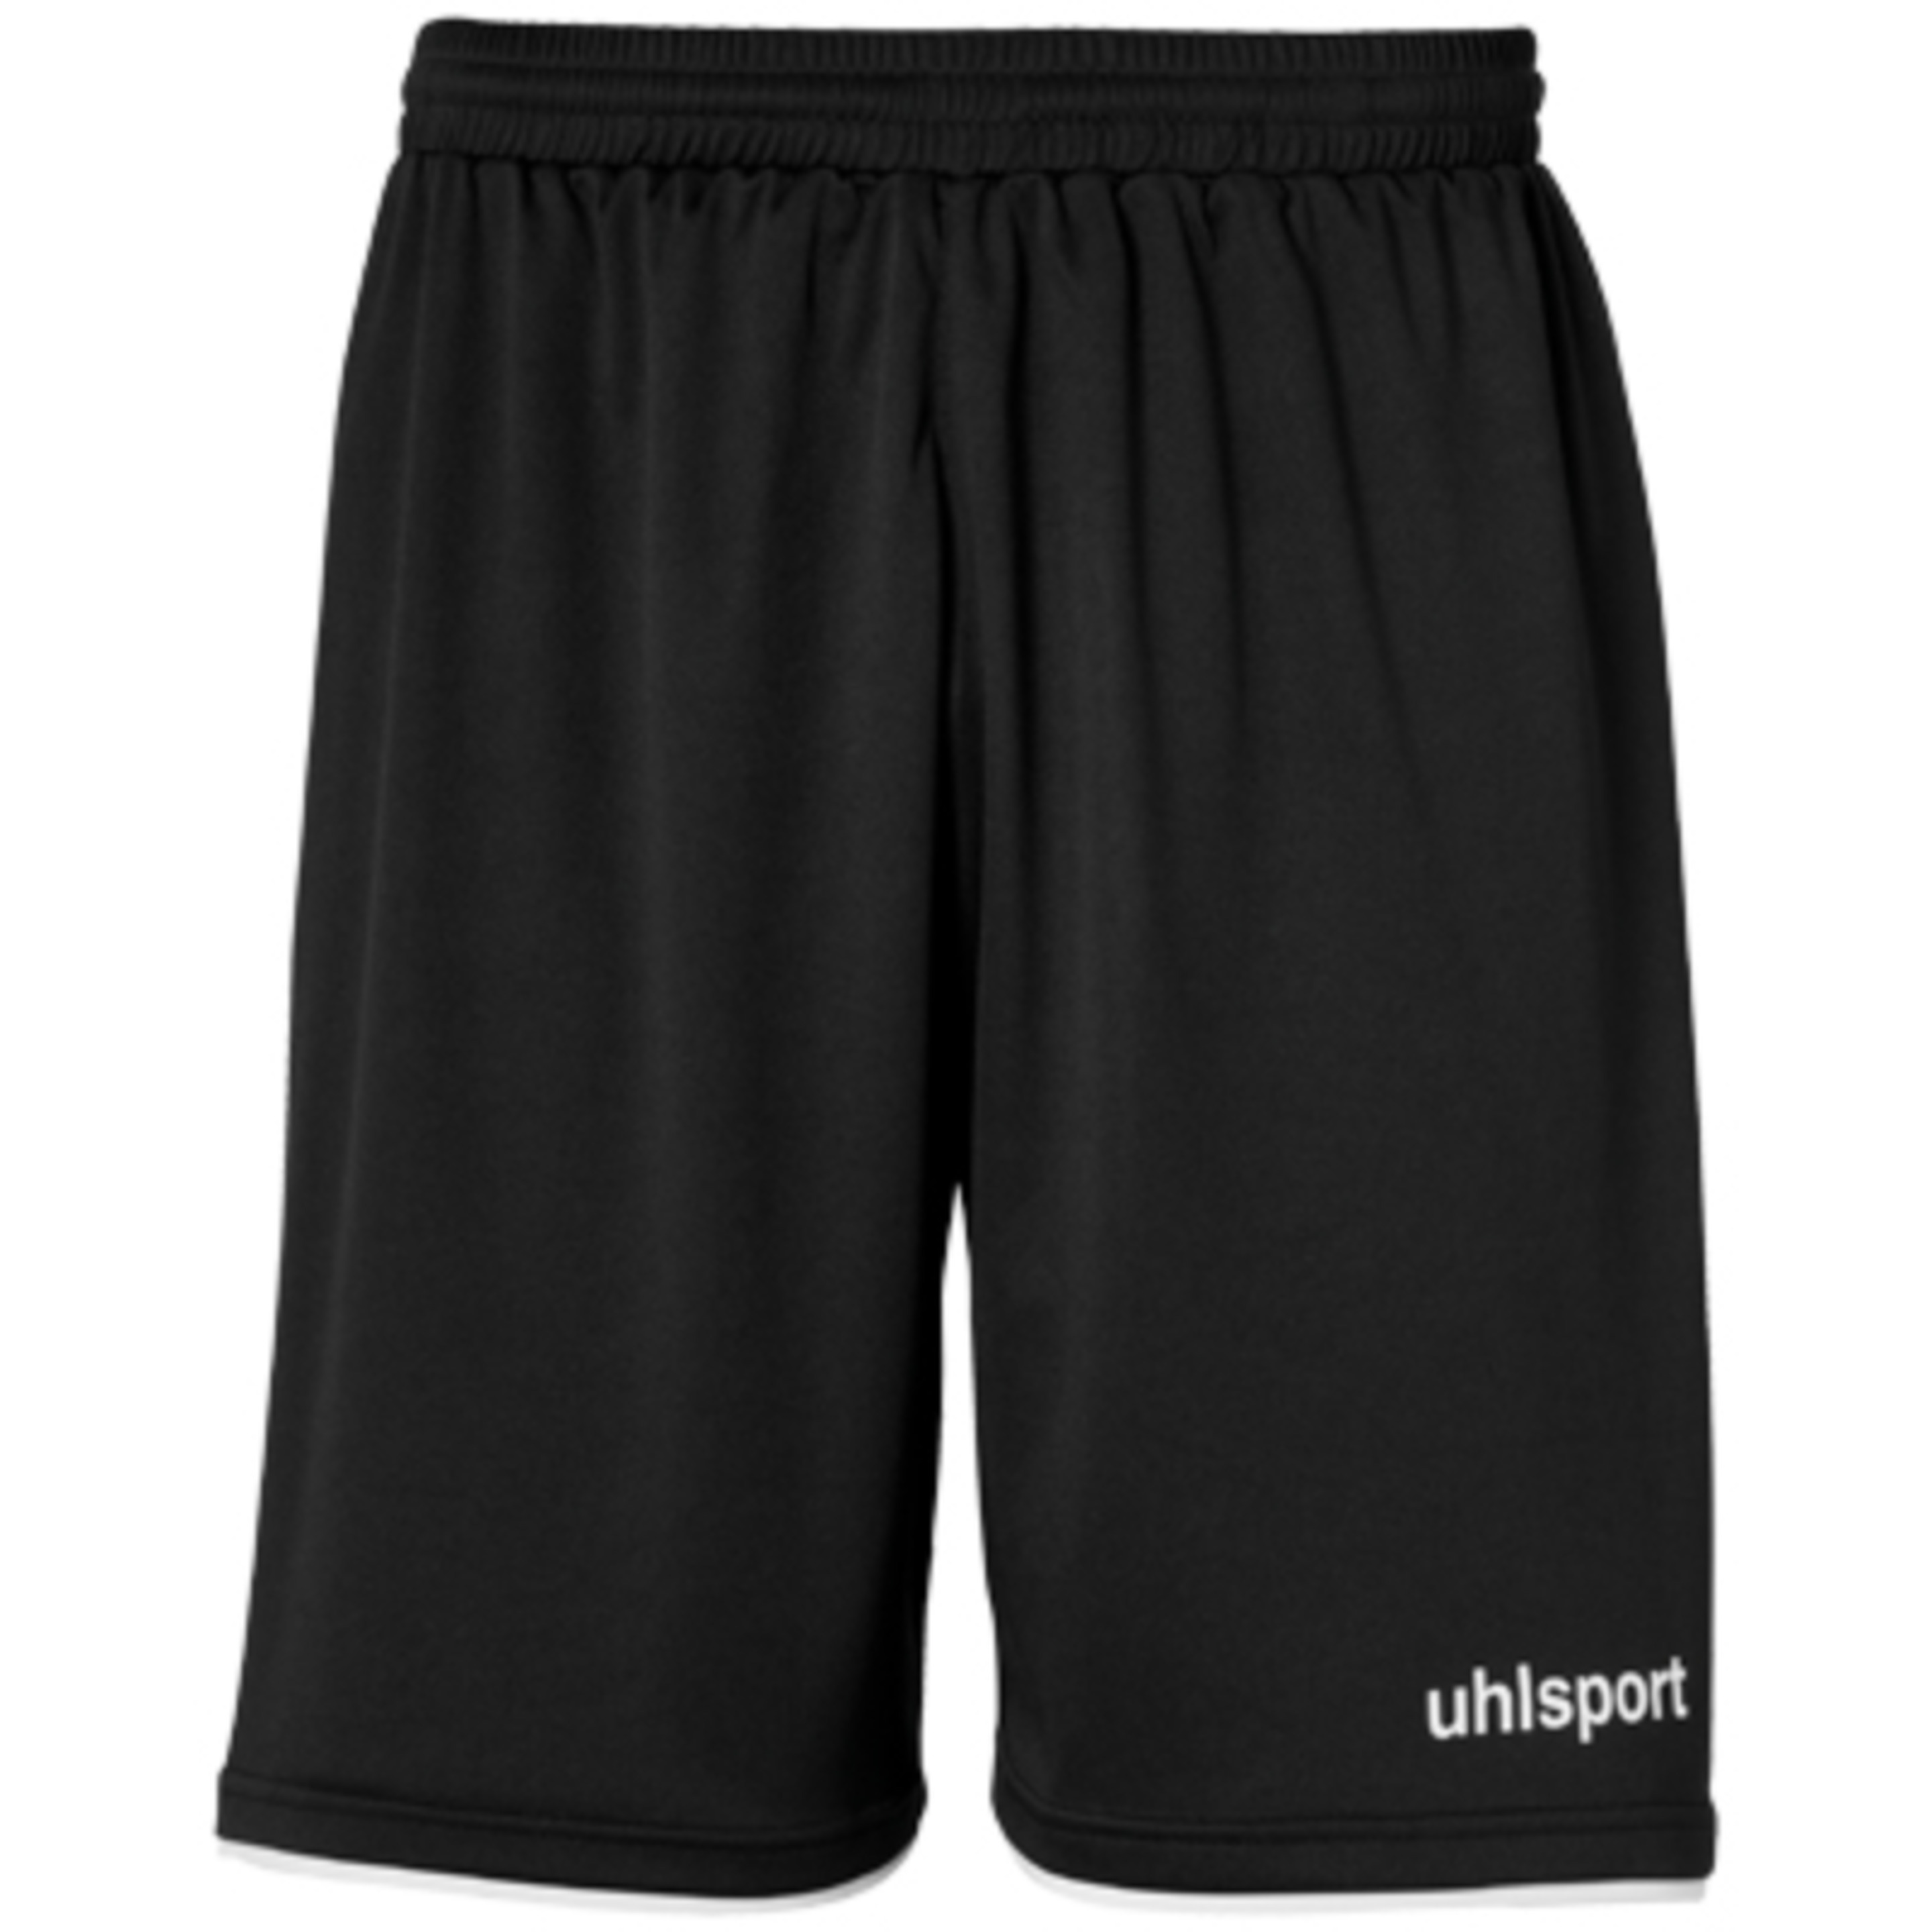 Club Shorts Negro/blanco Uhlsport